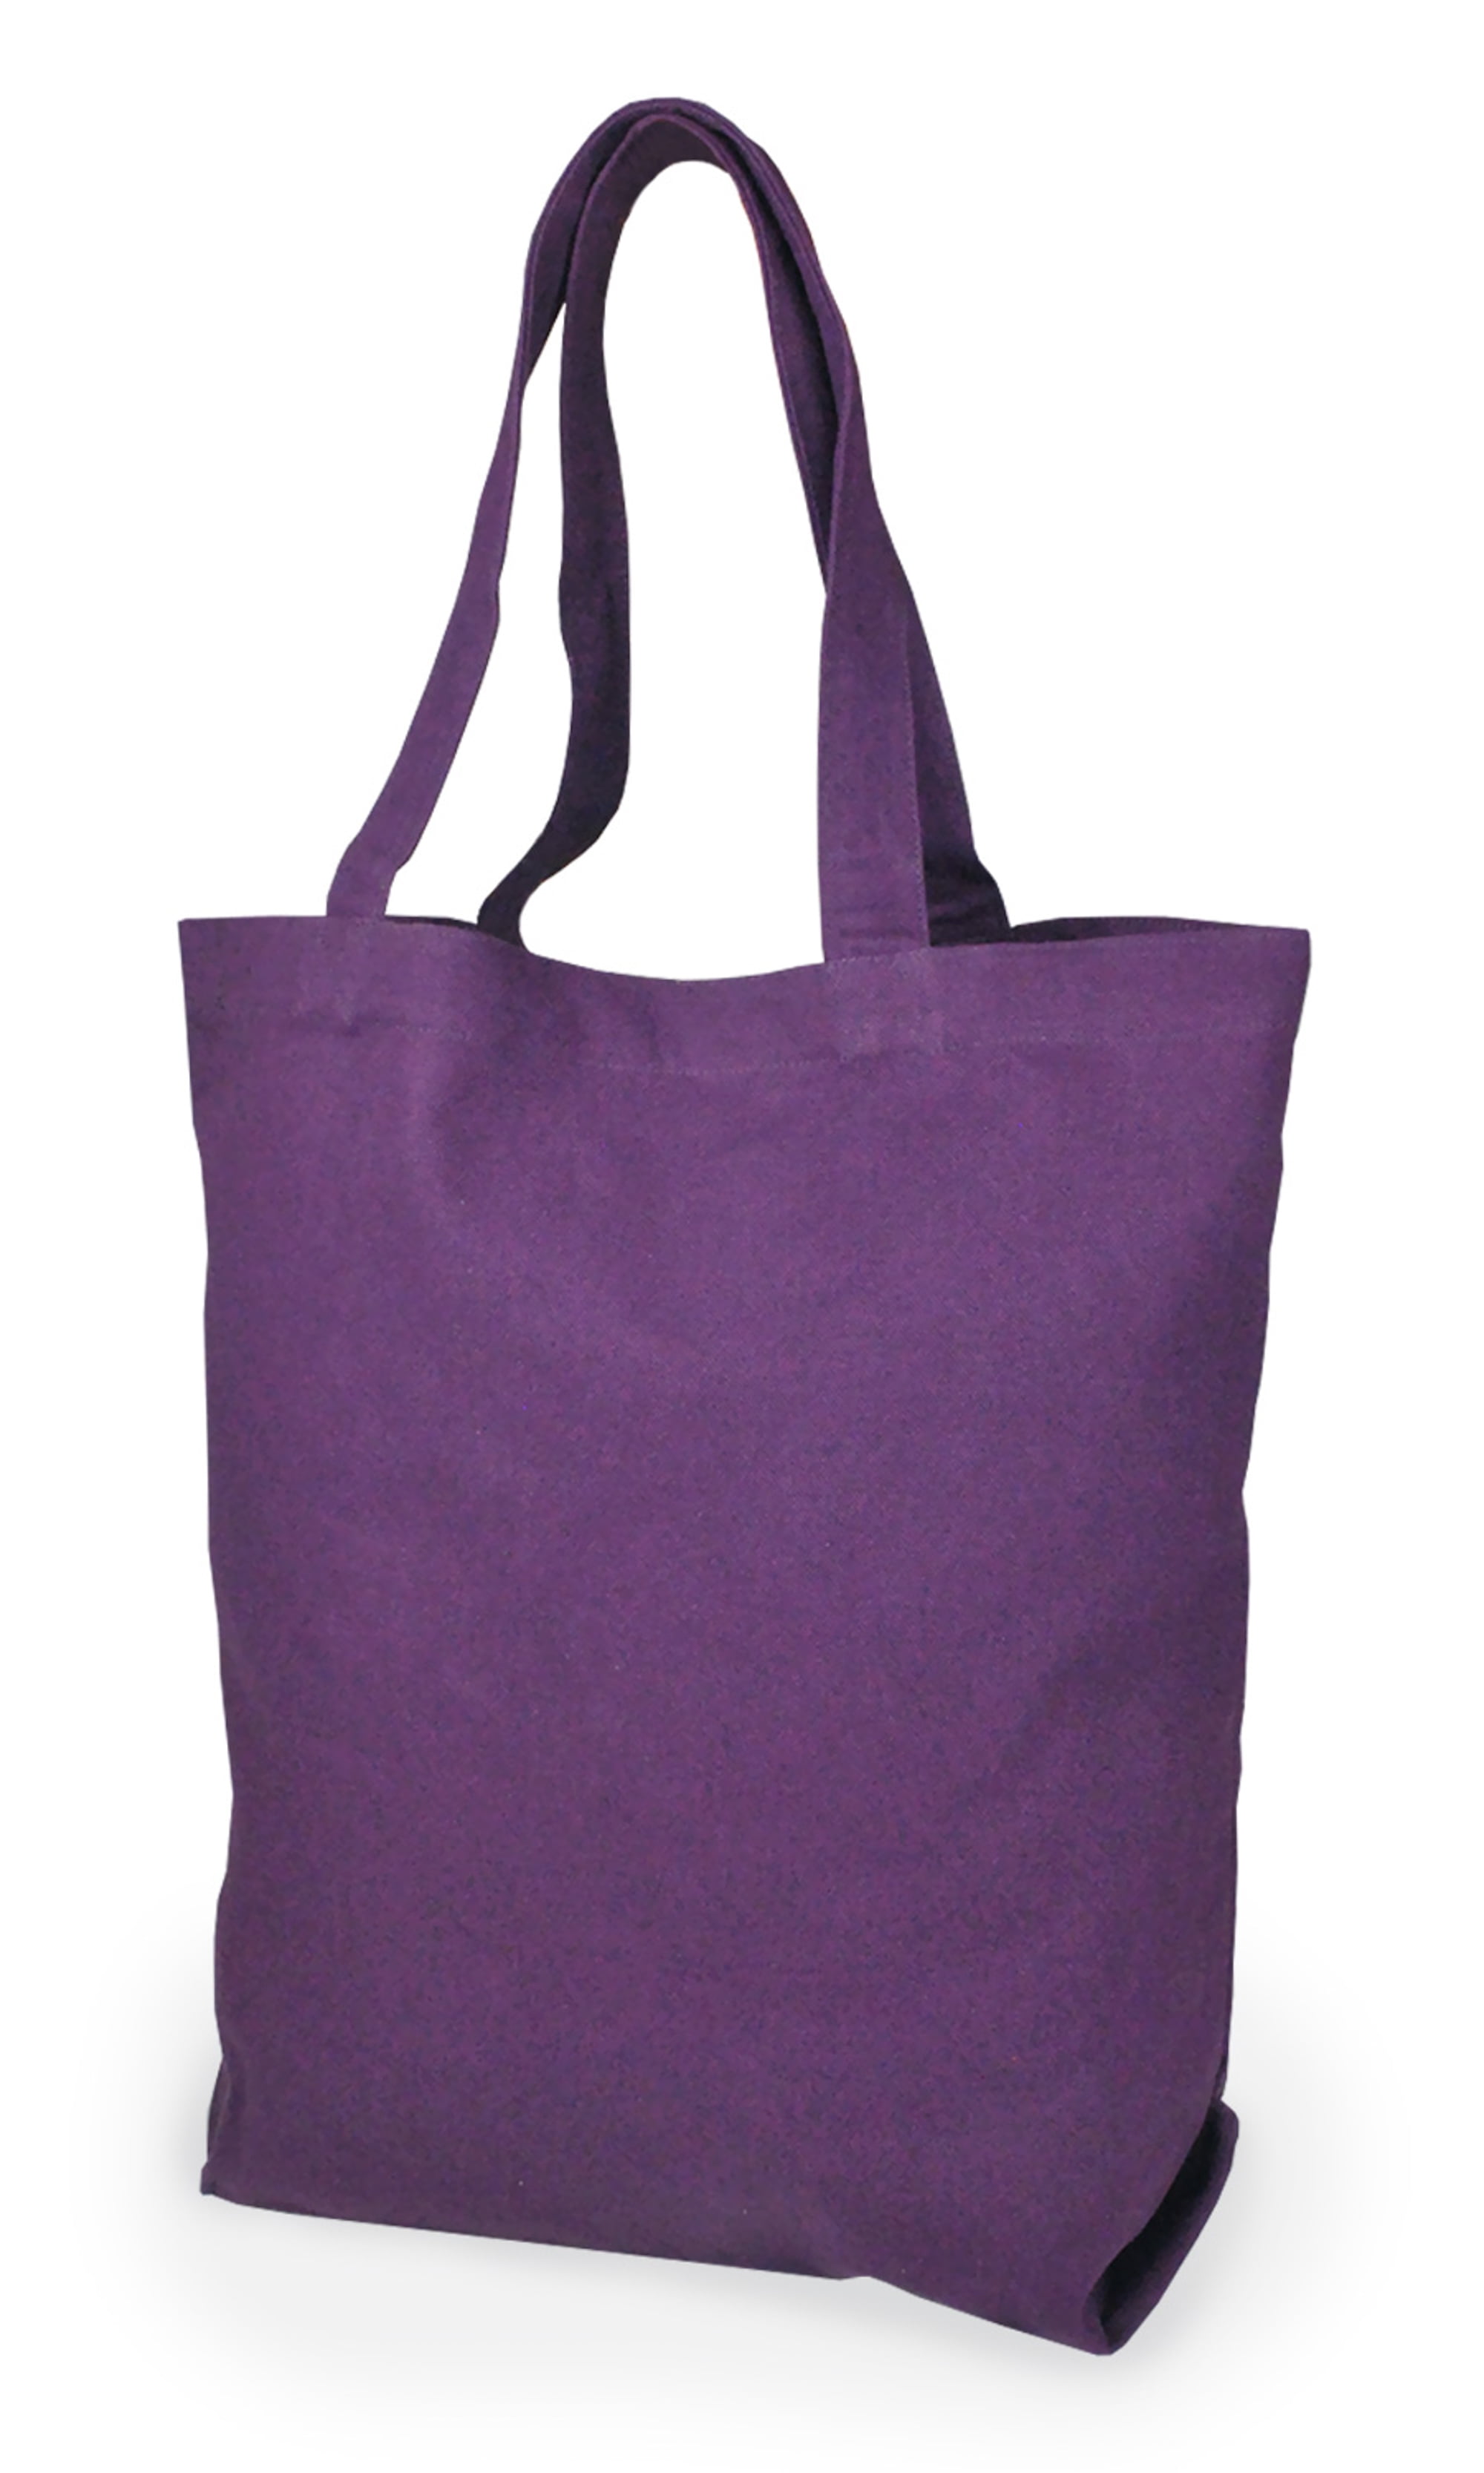 Cotton Canvas Multi Color Custom Basic Tote Bag - 15x15 $1.71